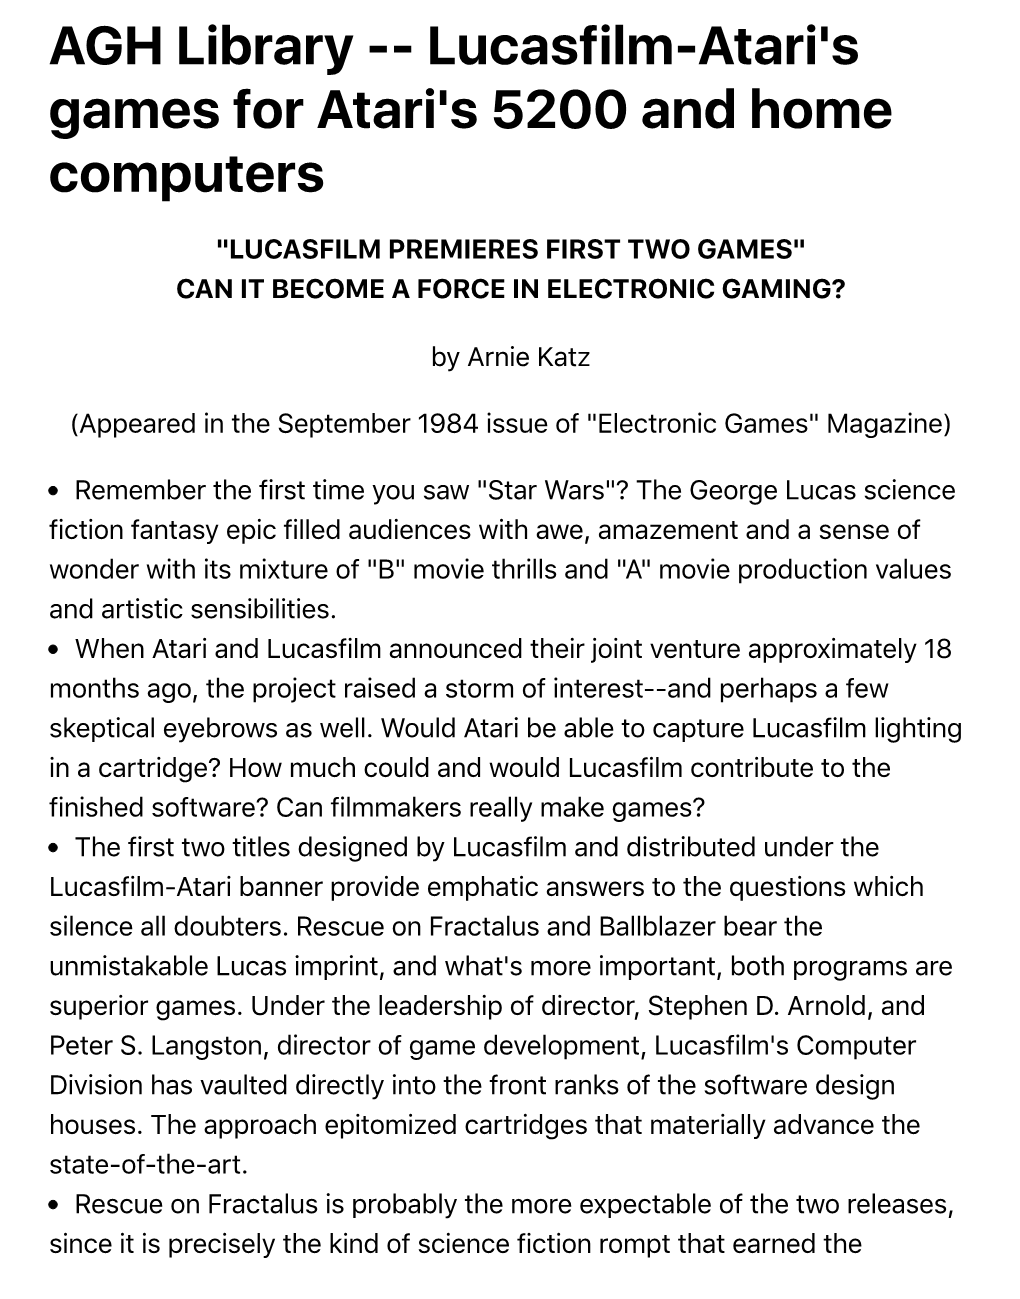 Lucasfilm-Atari's Games for Atari's 5200 and Home Computers